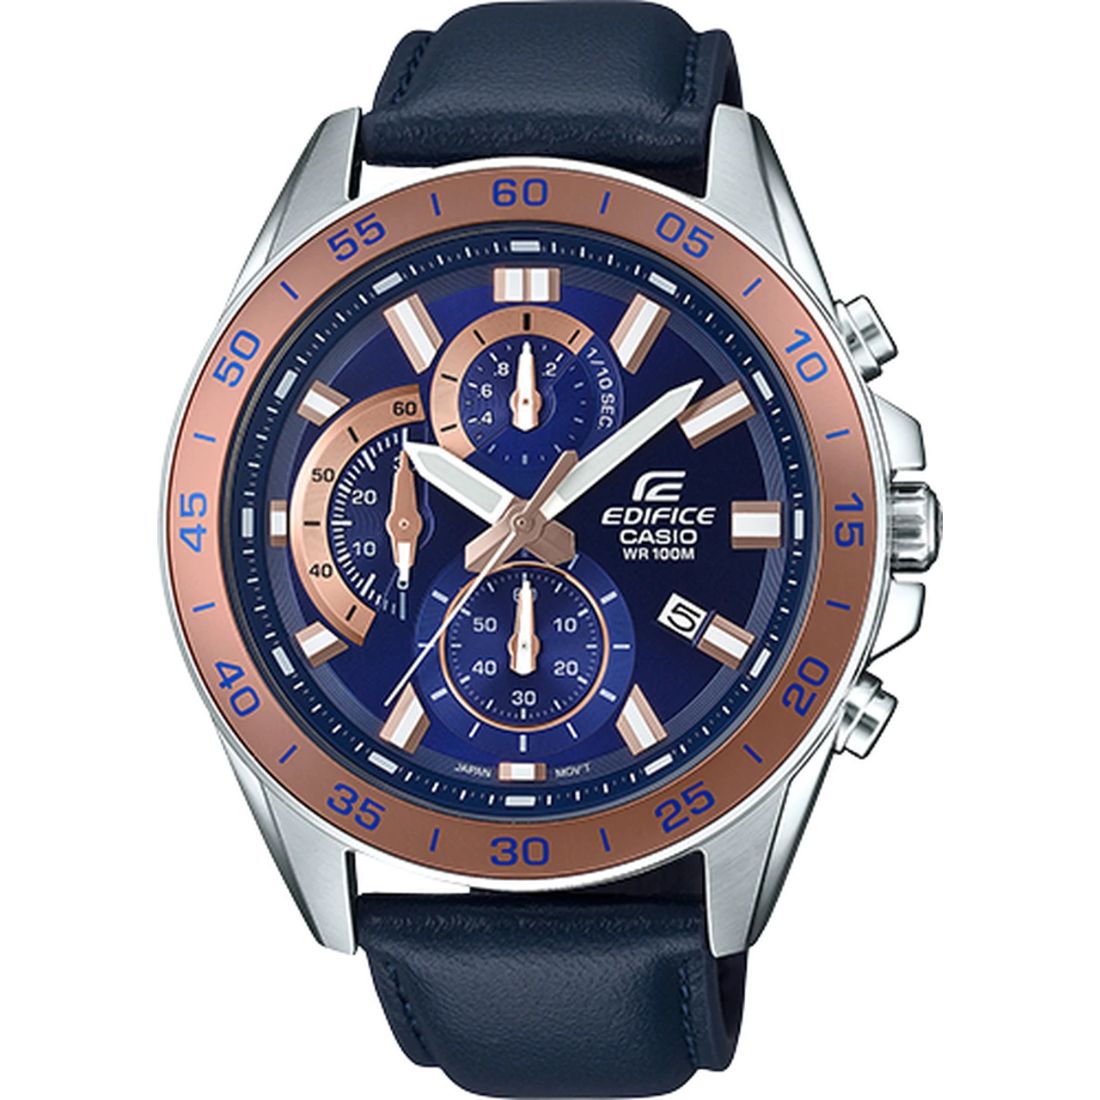 Casio Men's Edifice Stainless Steel Chronograph Watch(Black Leather Strap -EFV550L-2AV) $29